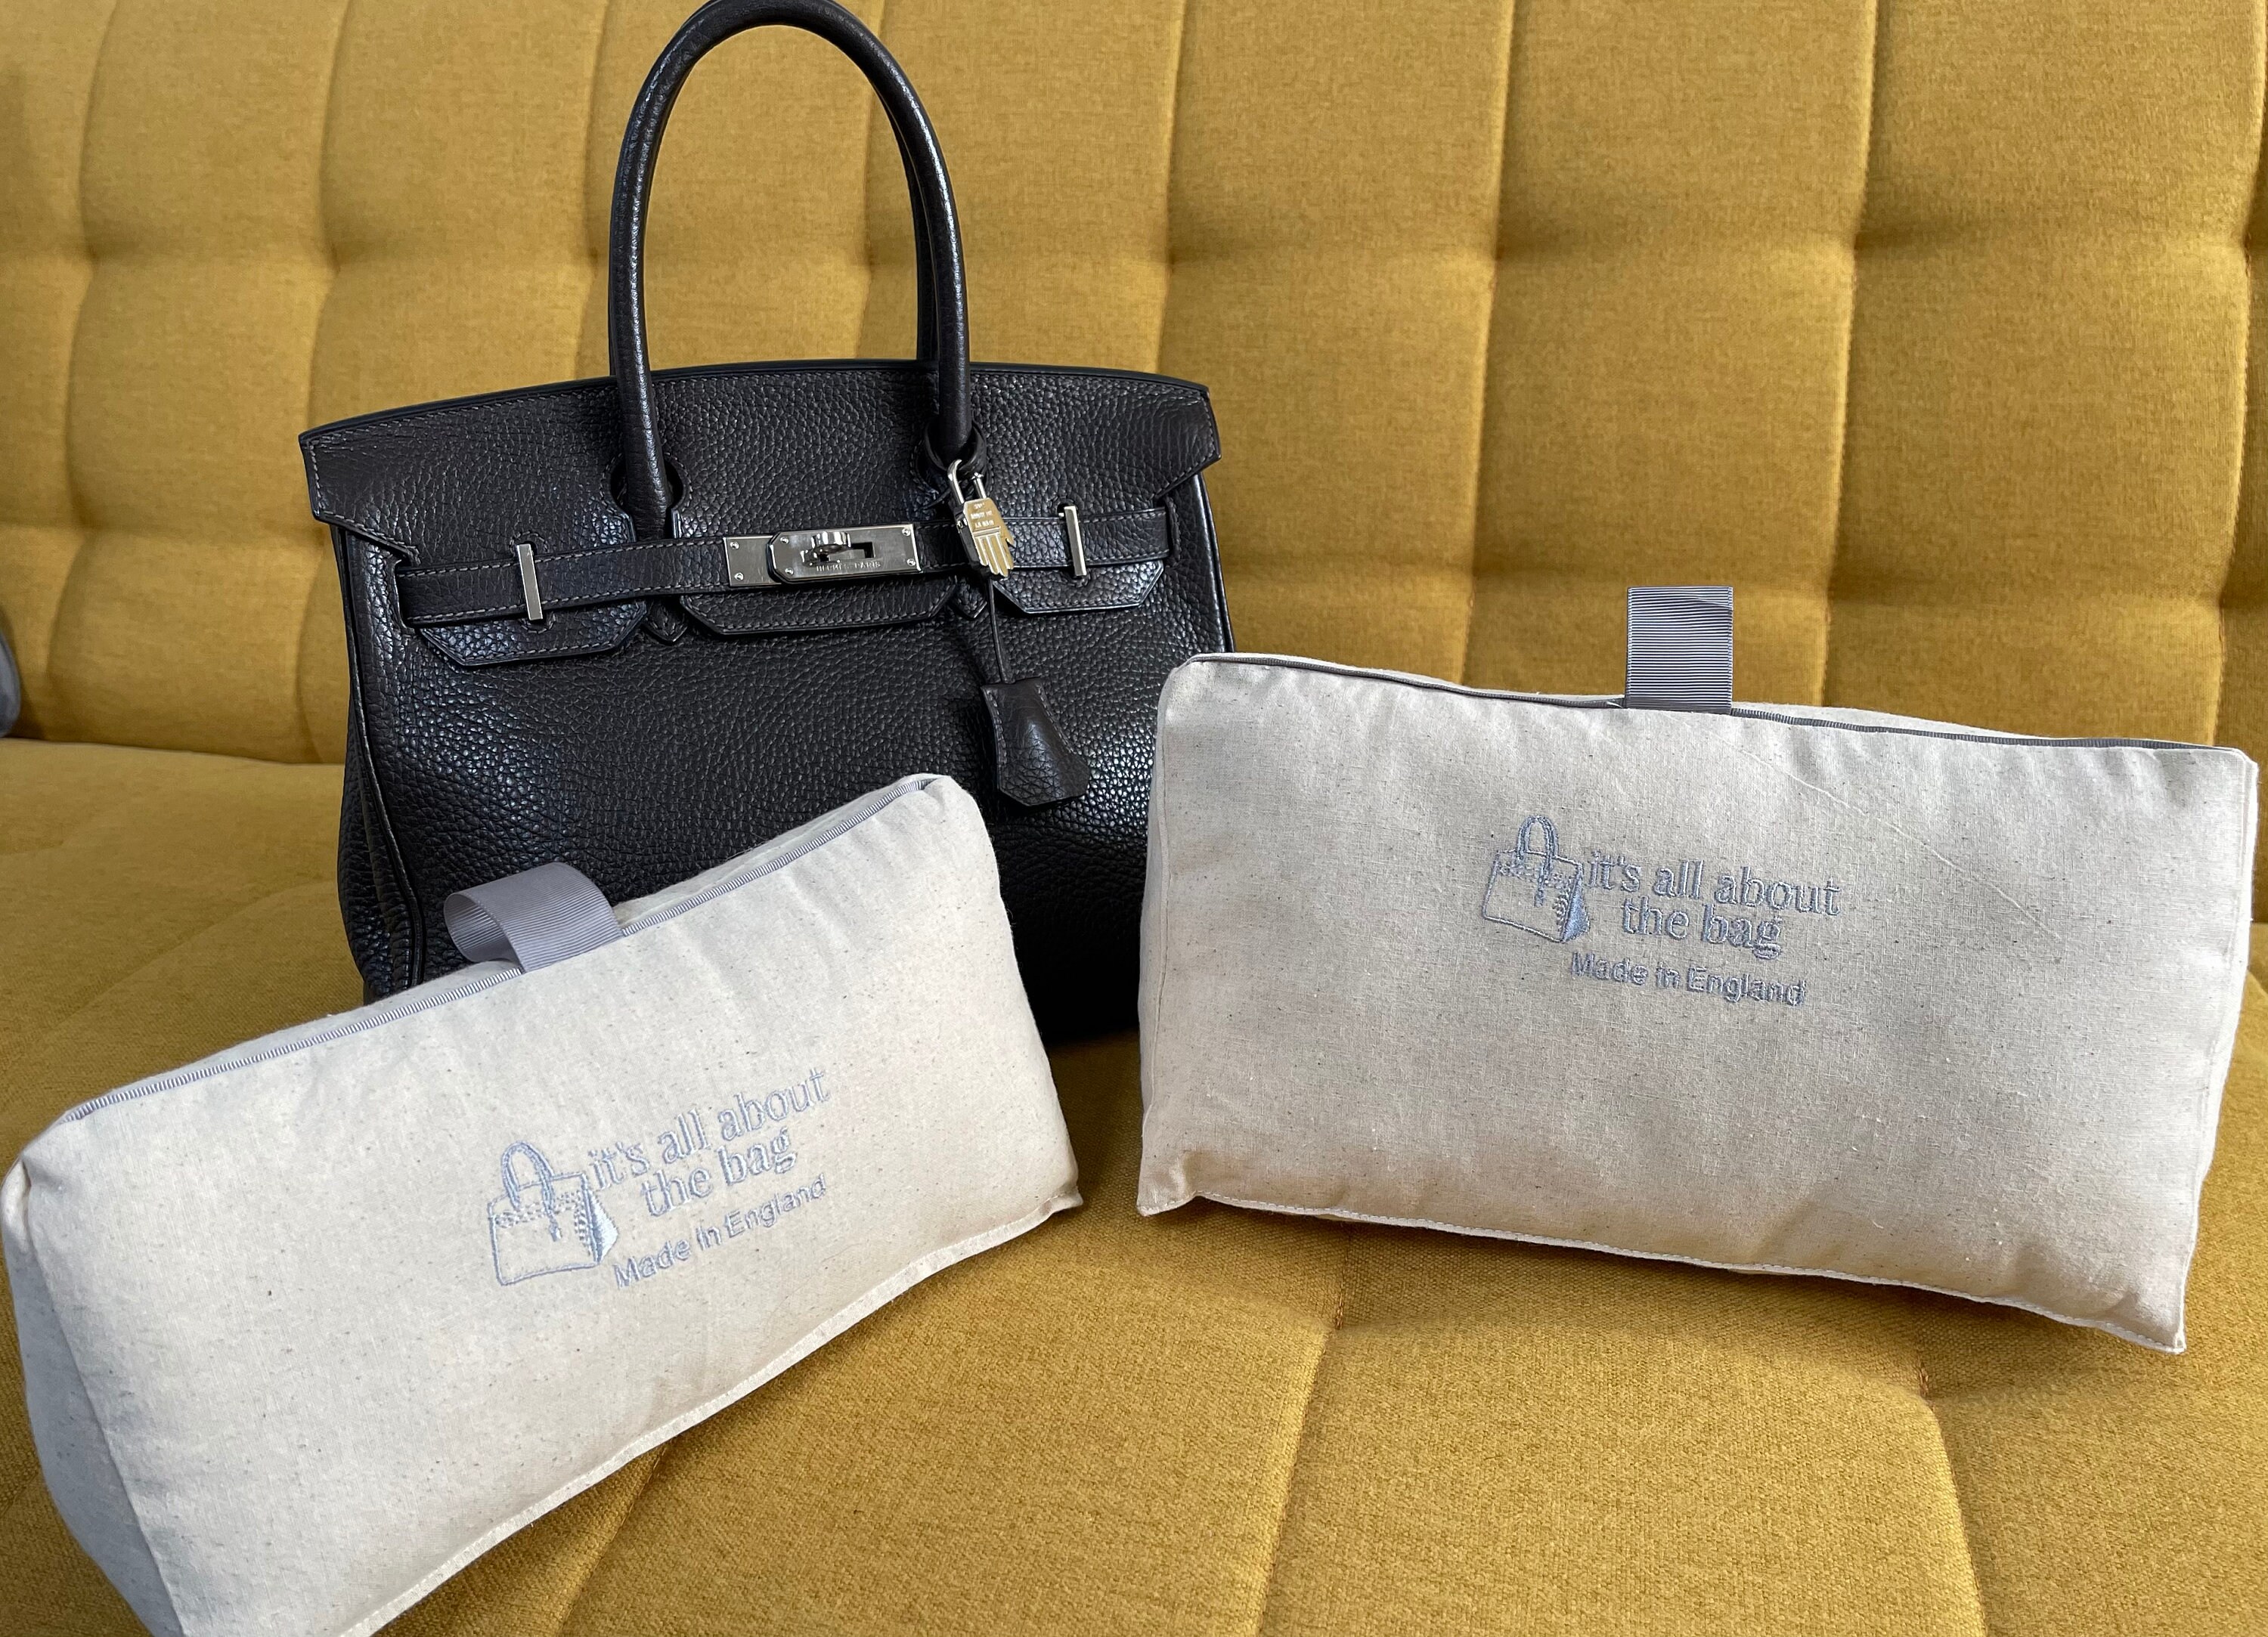 Birkin Bag Accessories - Purse Handbag Pillow Women Shoulder Bag